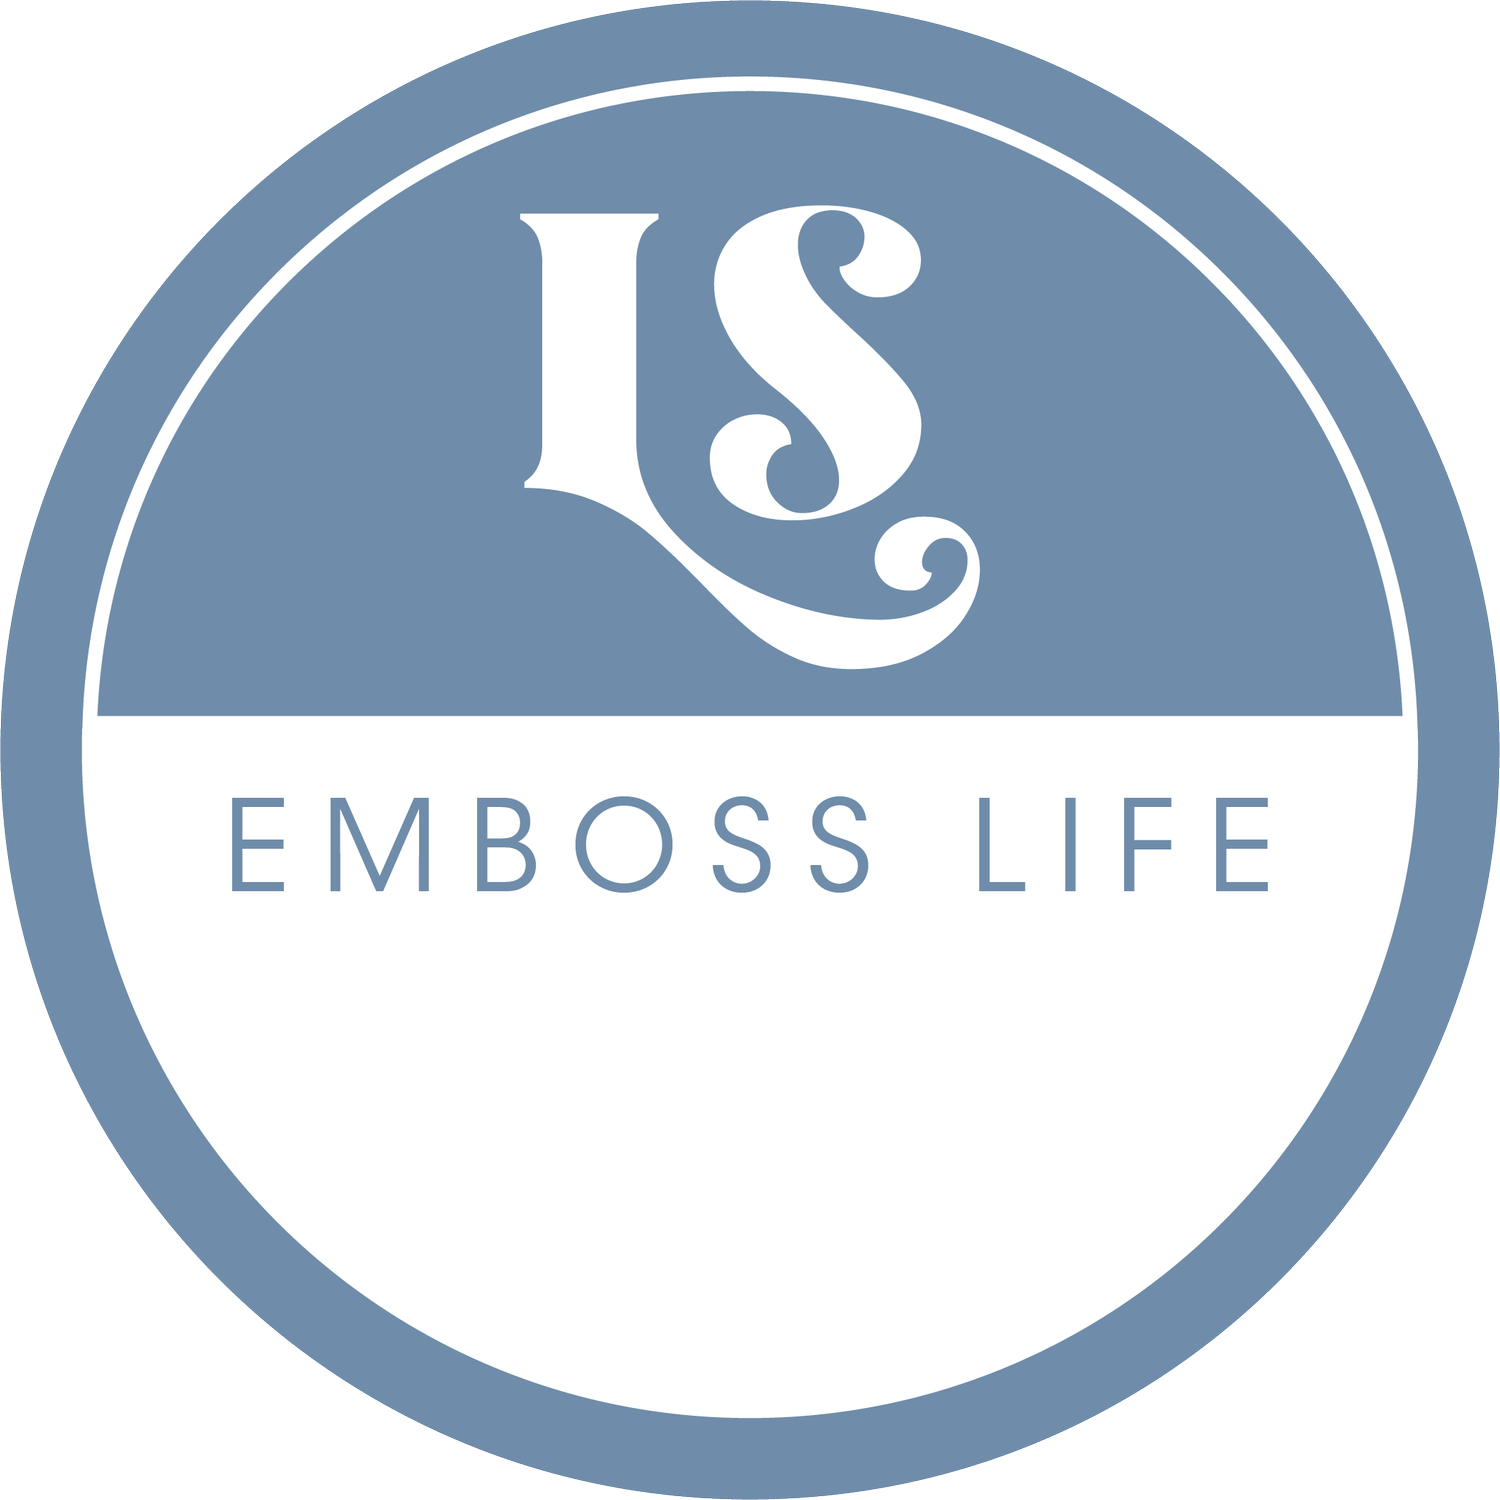 EMBOSS LIFE